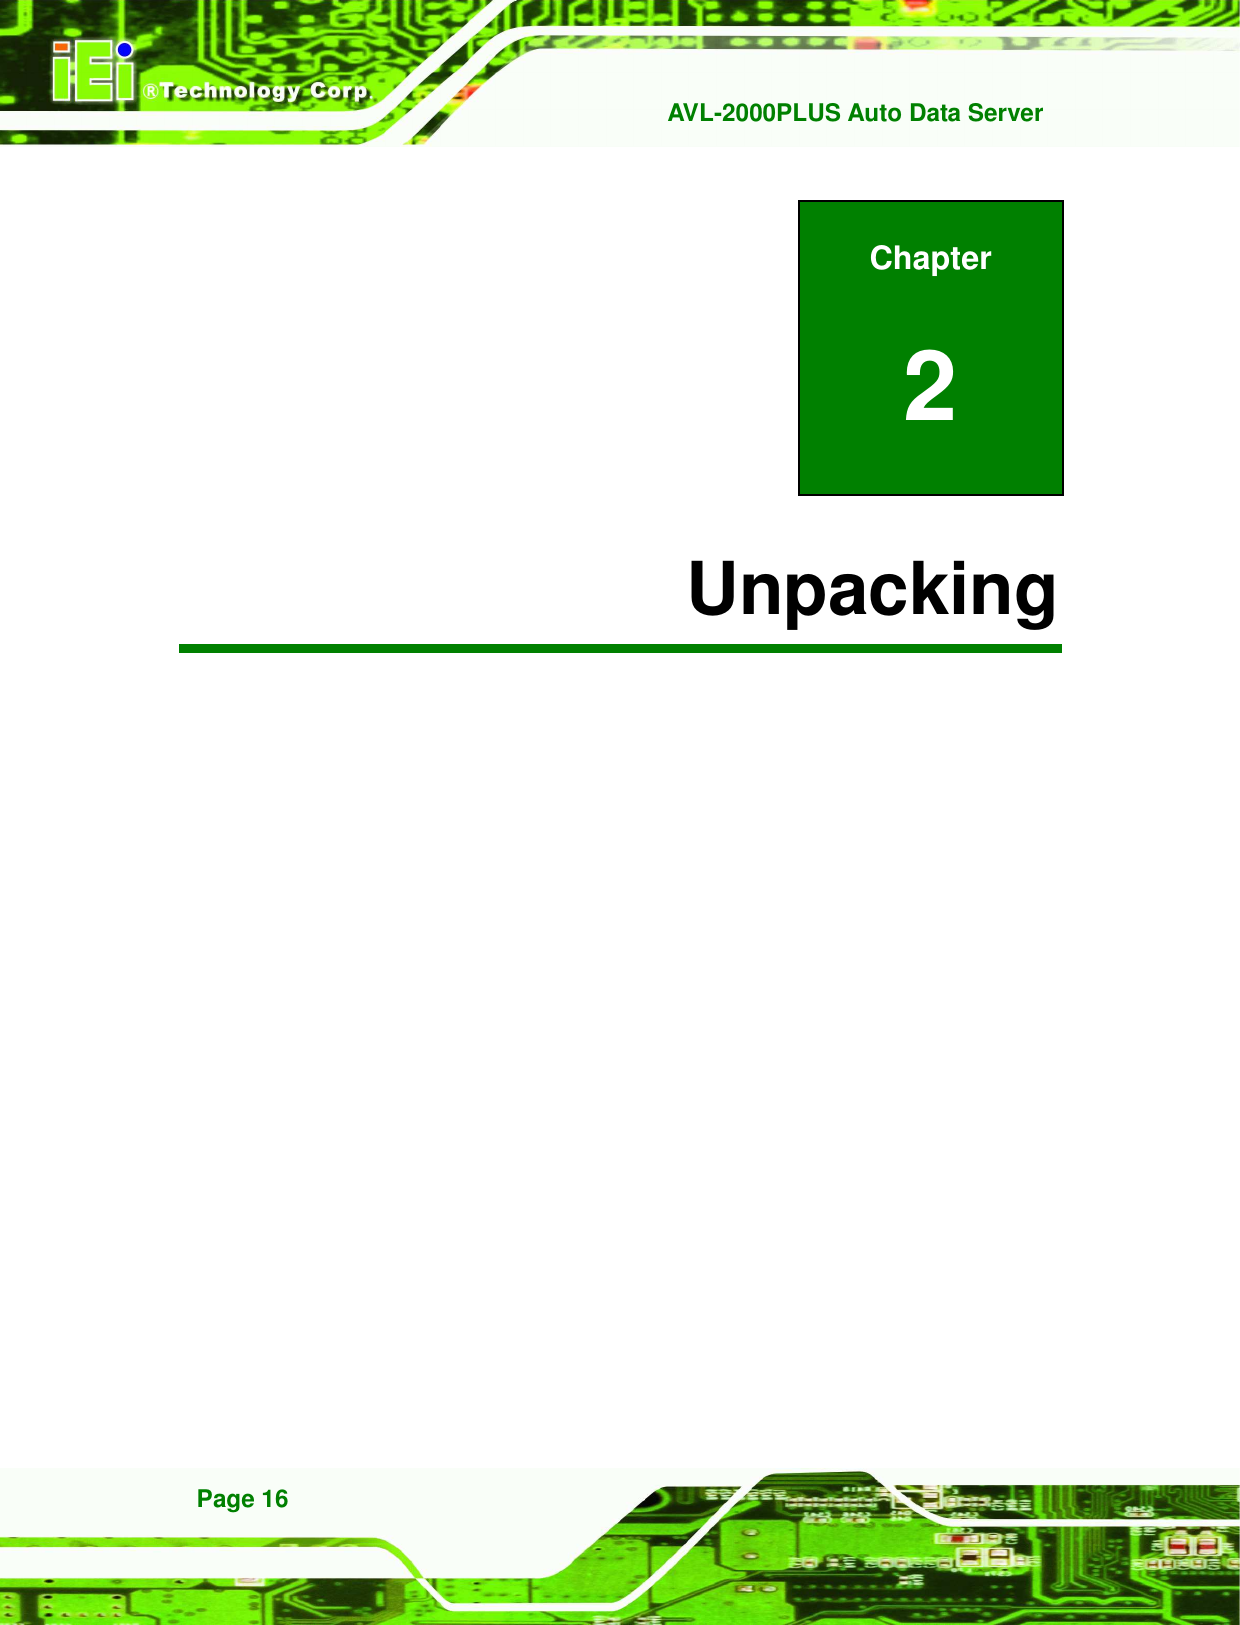   AVL-2000PLUS Auto Data Server Page 16 Chapter 2 2 Unpacking 